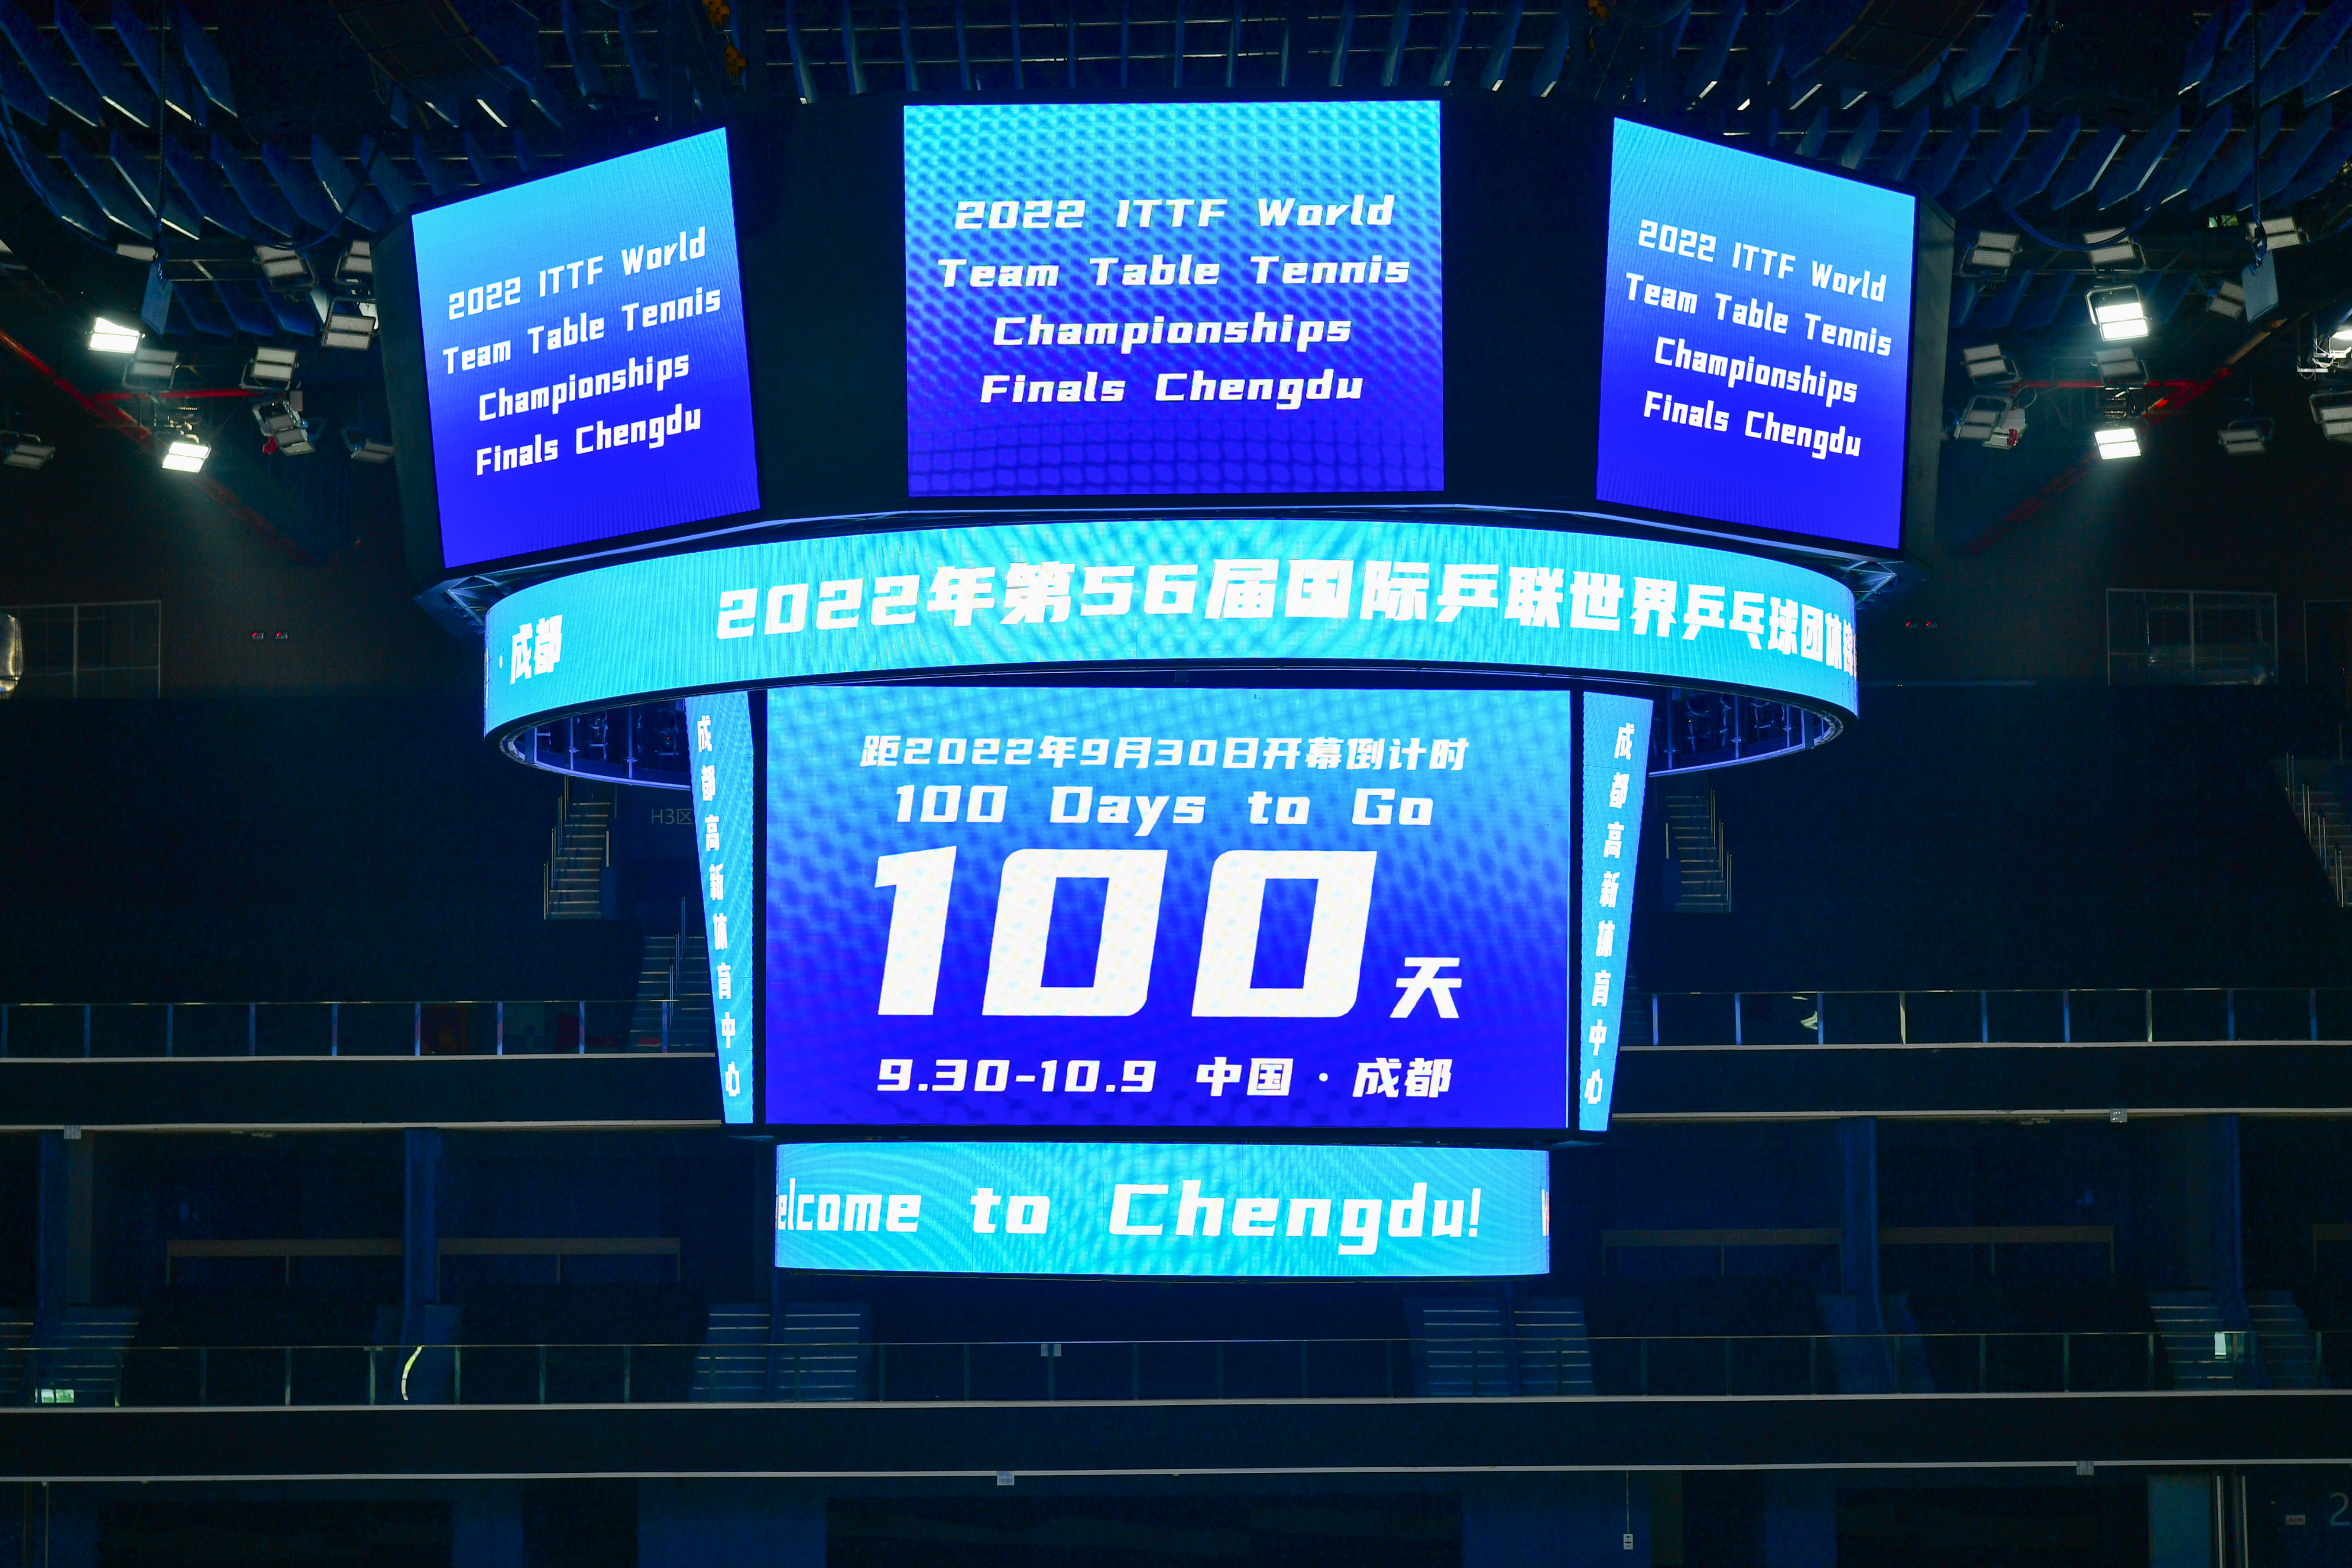 2022 ITTF World Team Table Tennis Championships Finals Chengdu